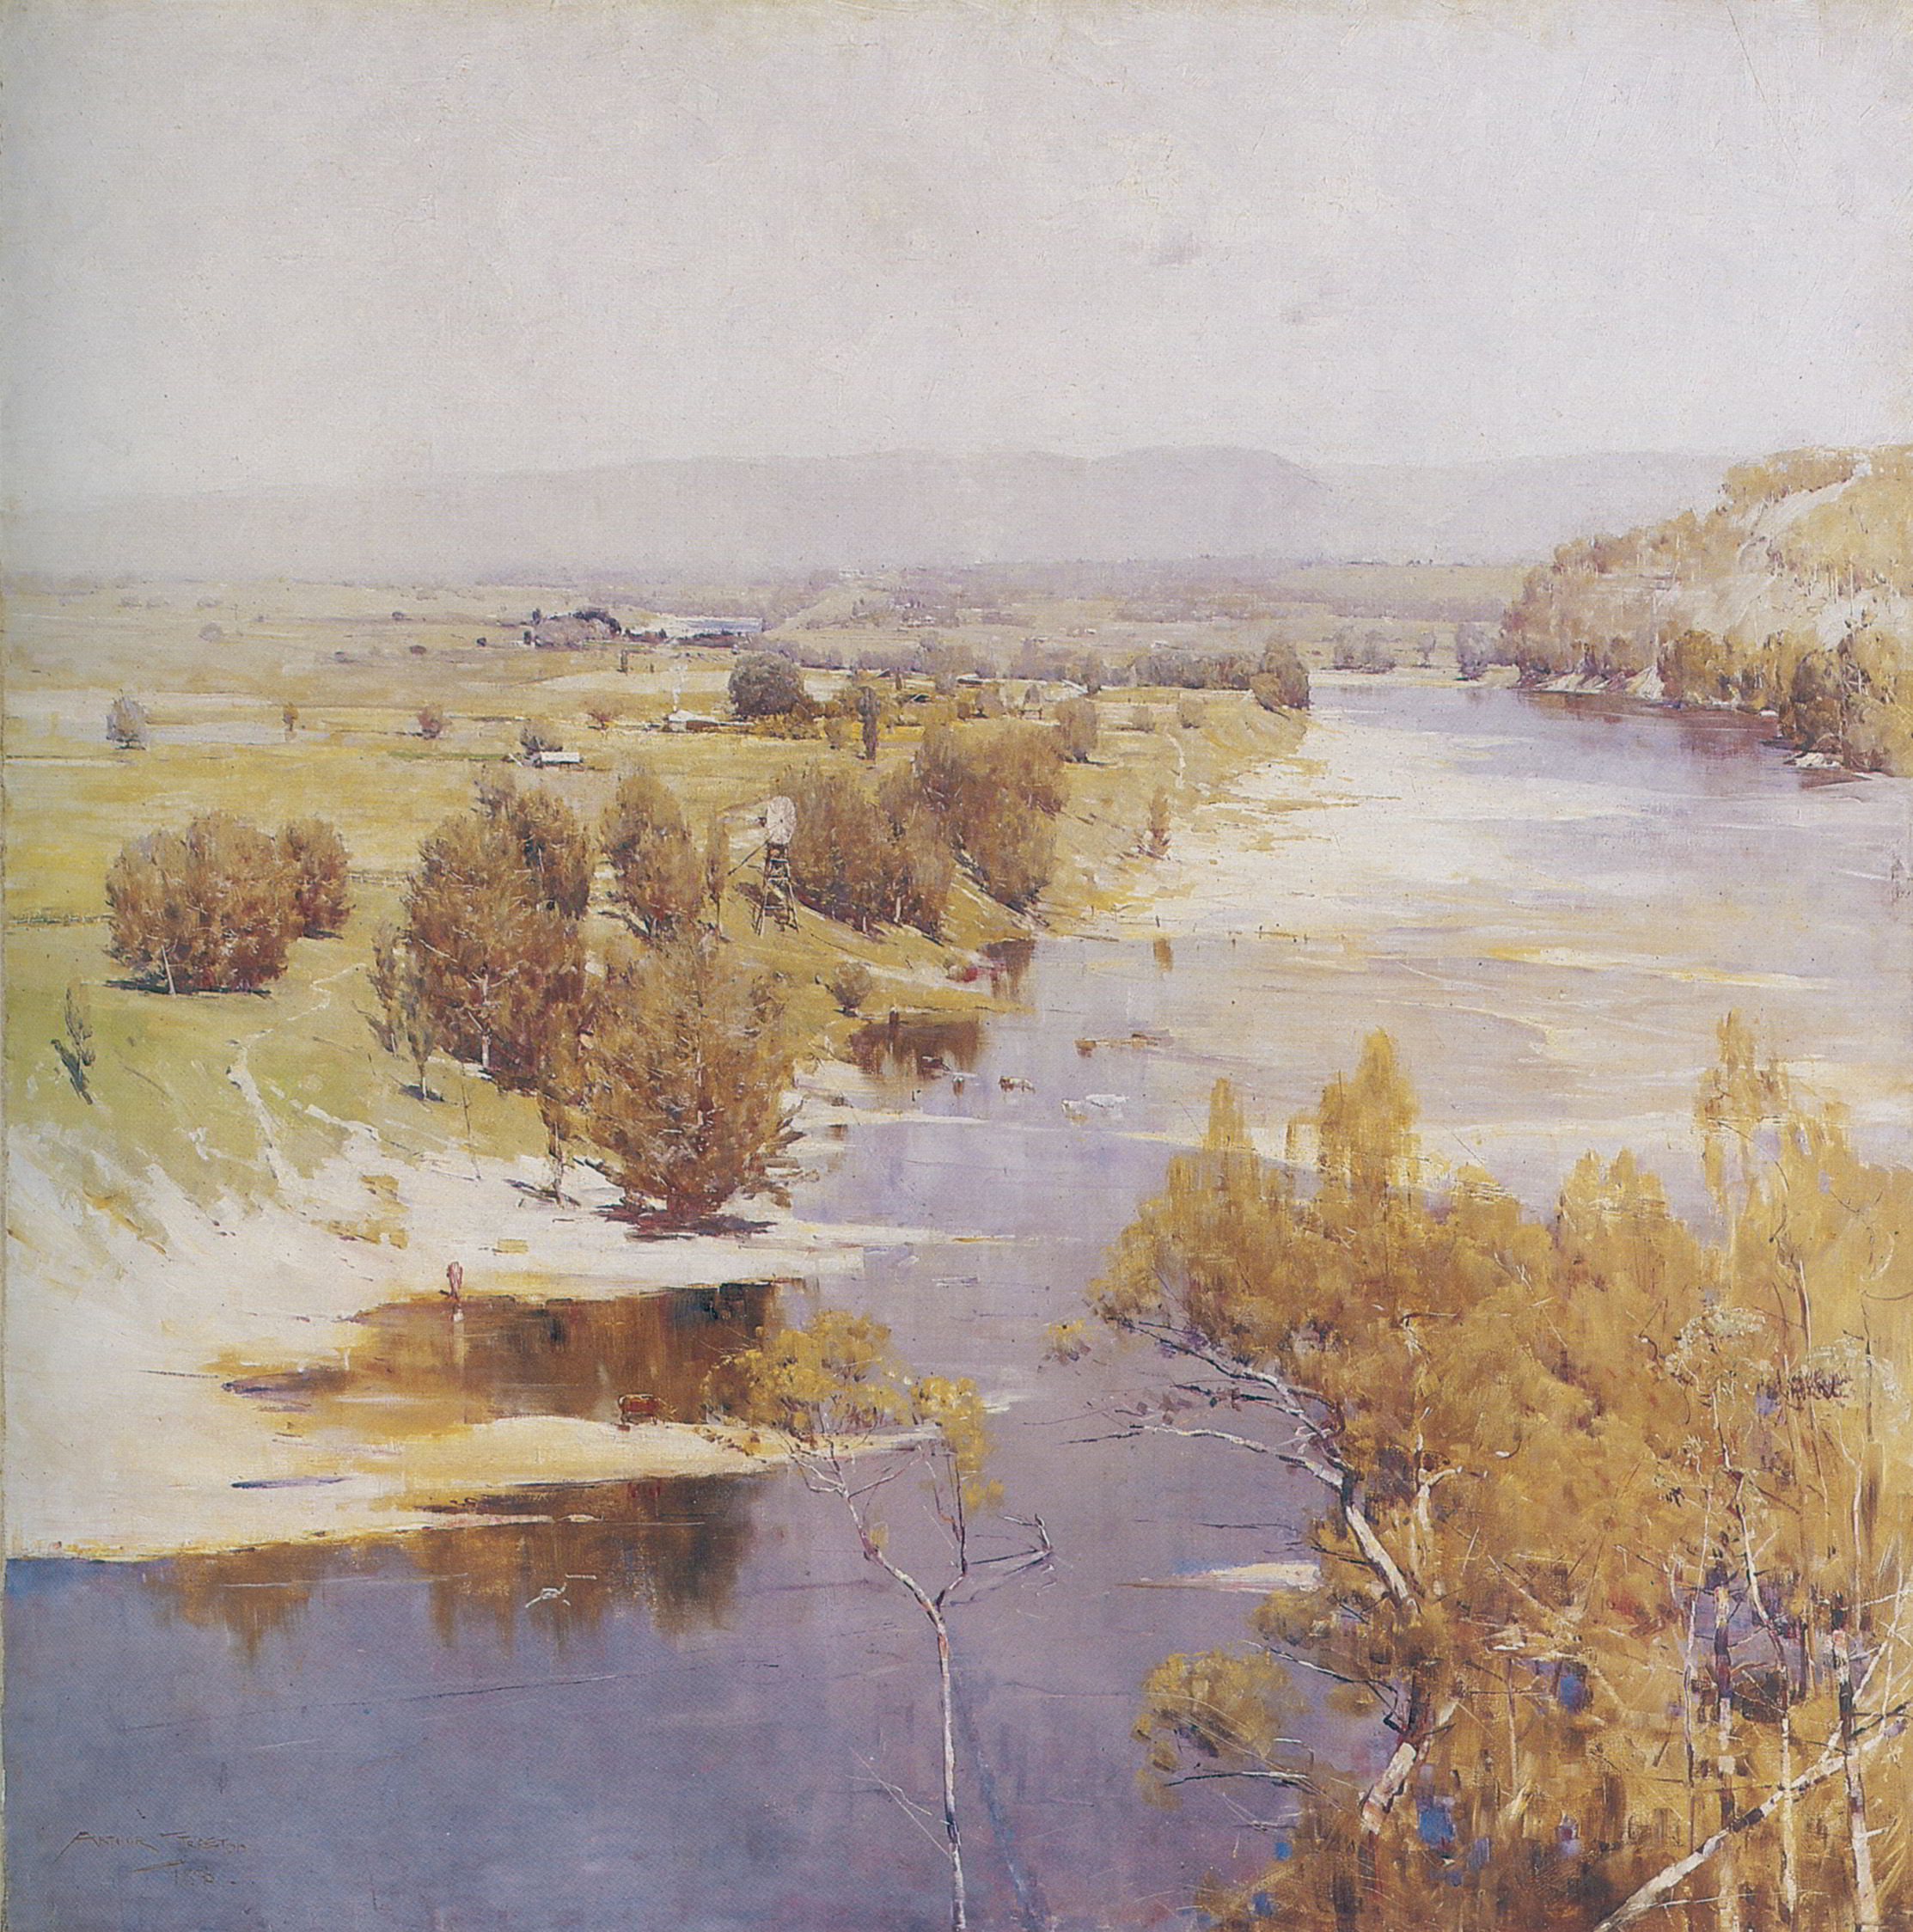 The purple noon's transparent might by Arthur Streeton- Australian Painting